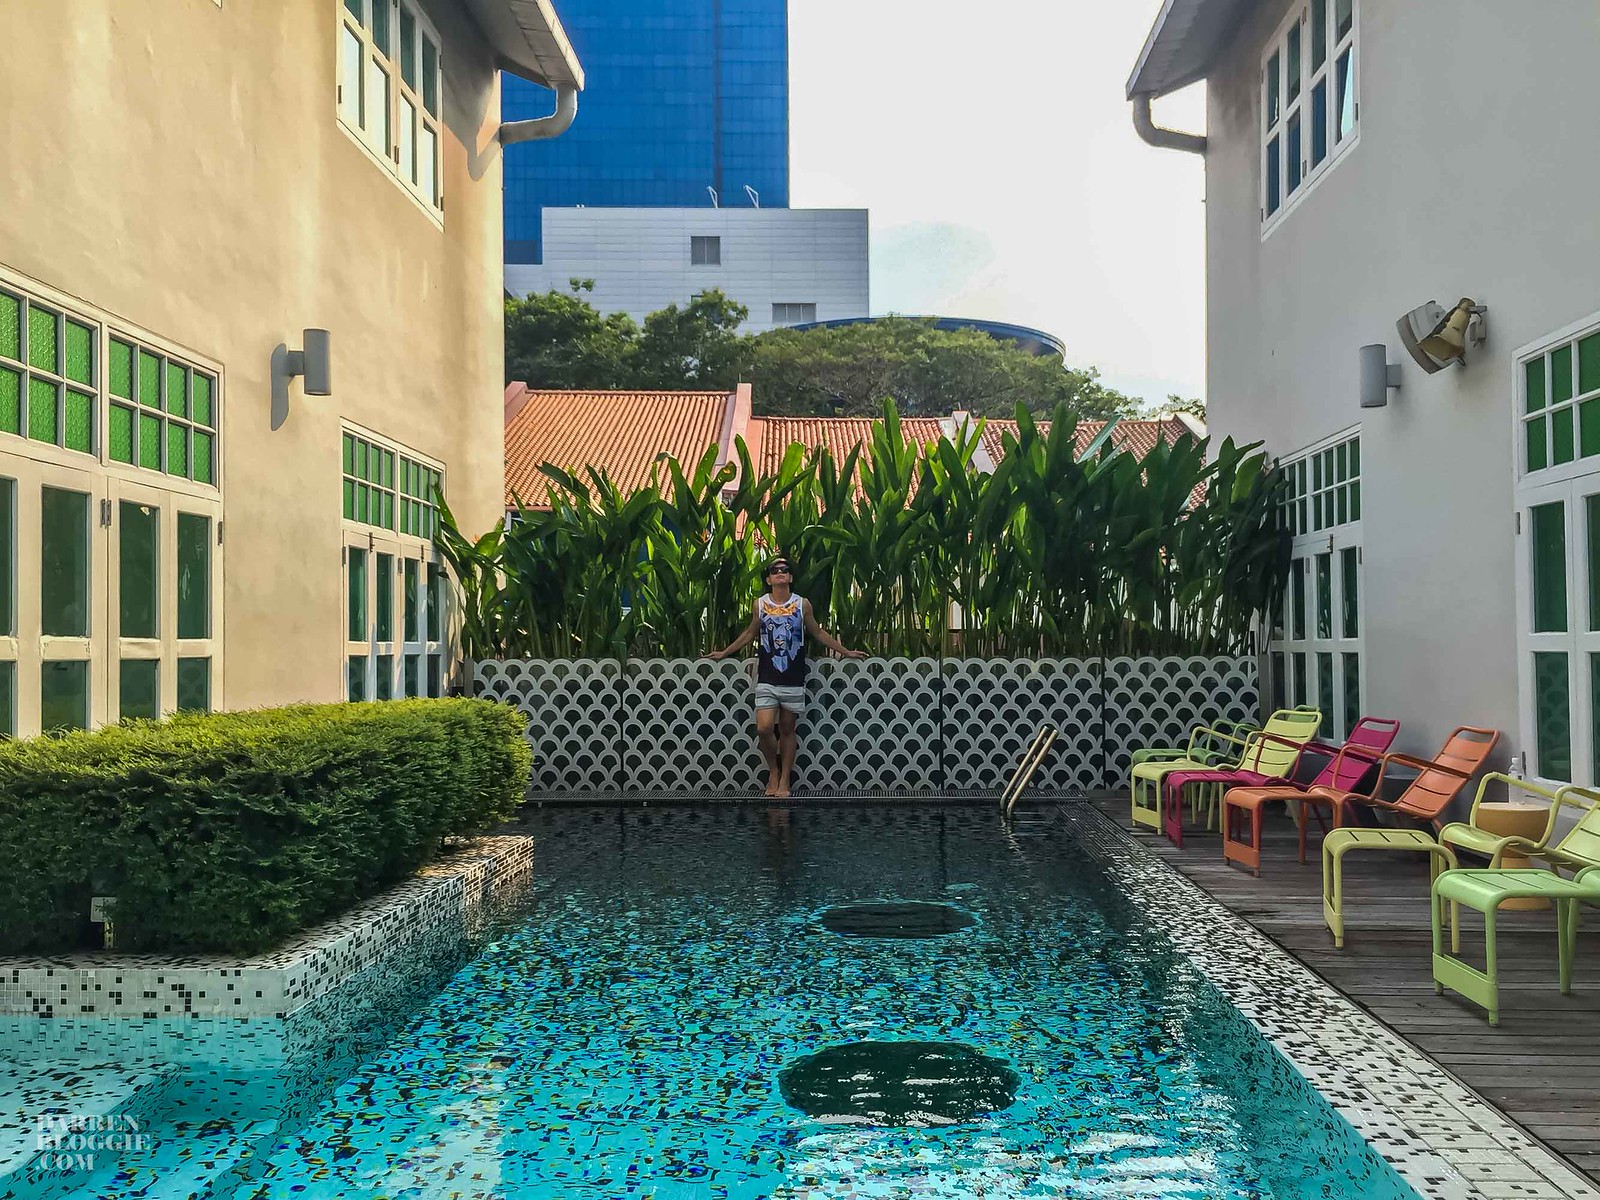 new-majestic-hotel-singapore-darrenbloggie-16